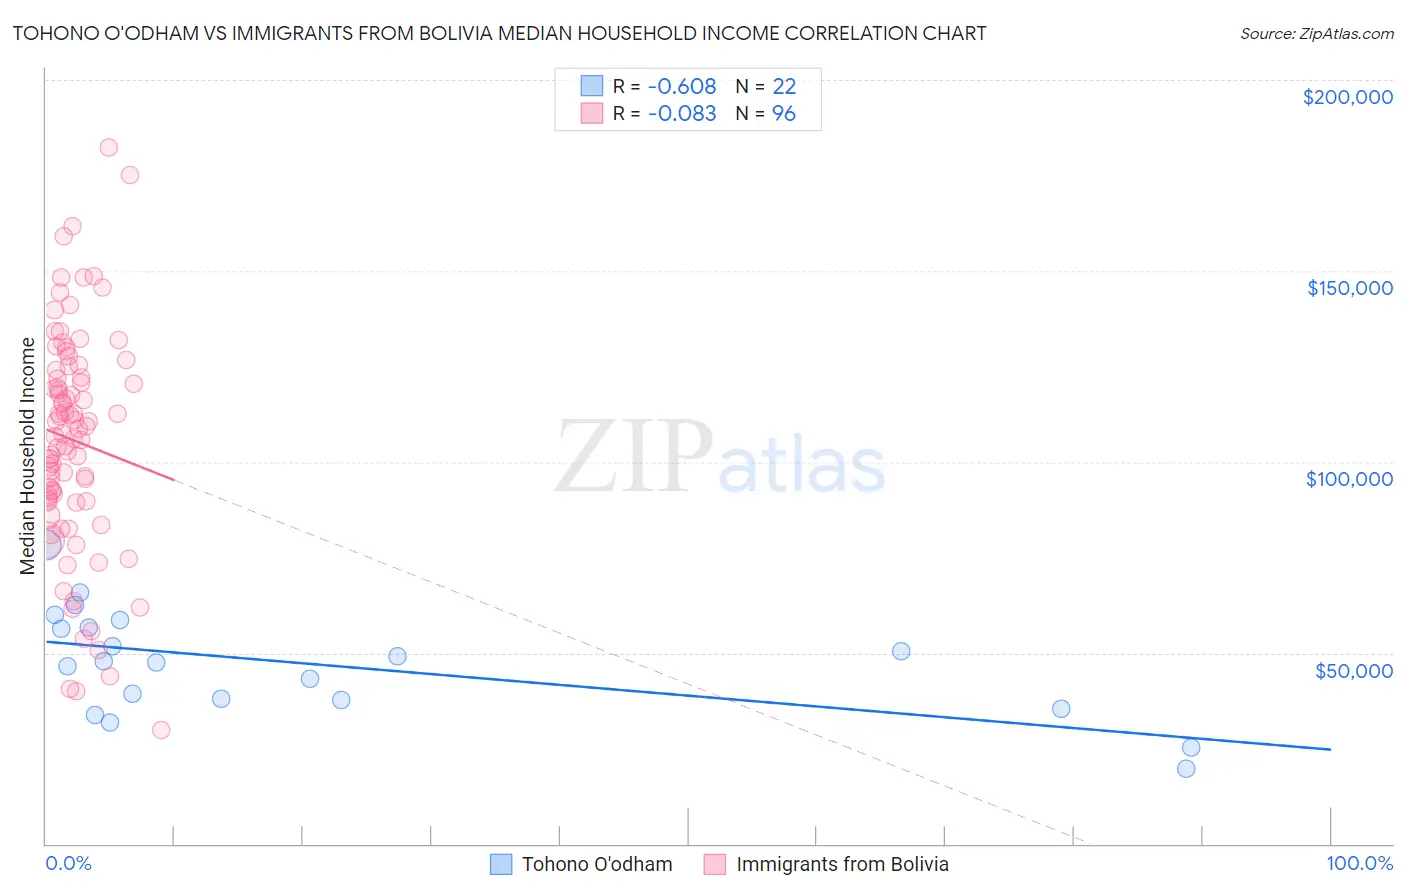 Tohono O'odham vs Immigrants from Bolivia Median Household Income